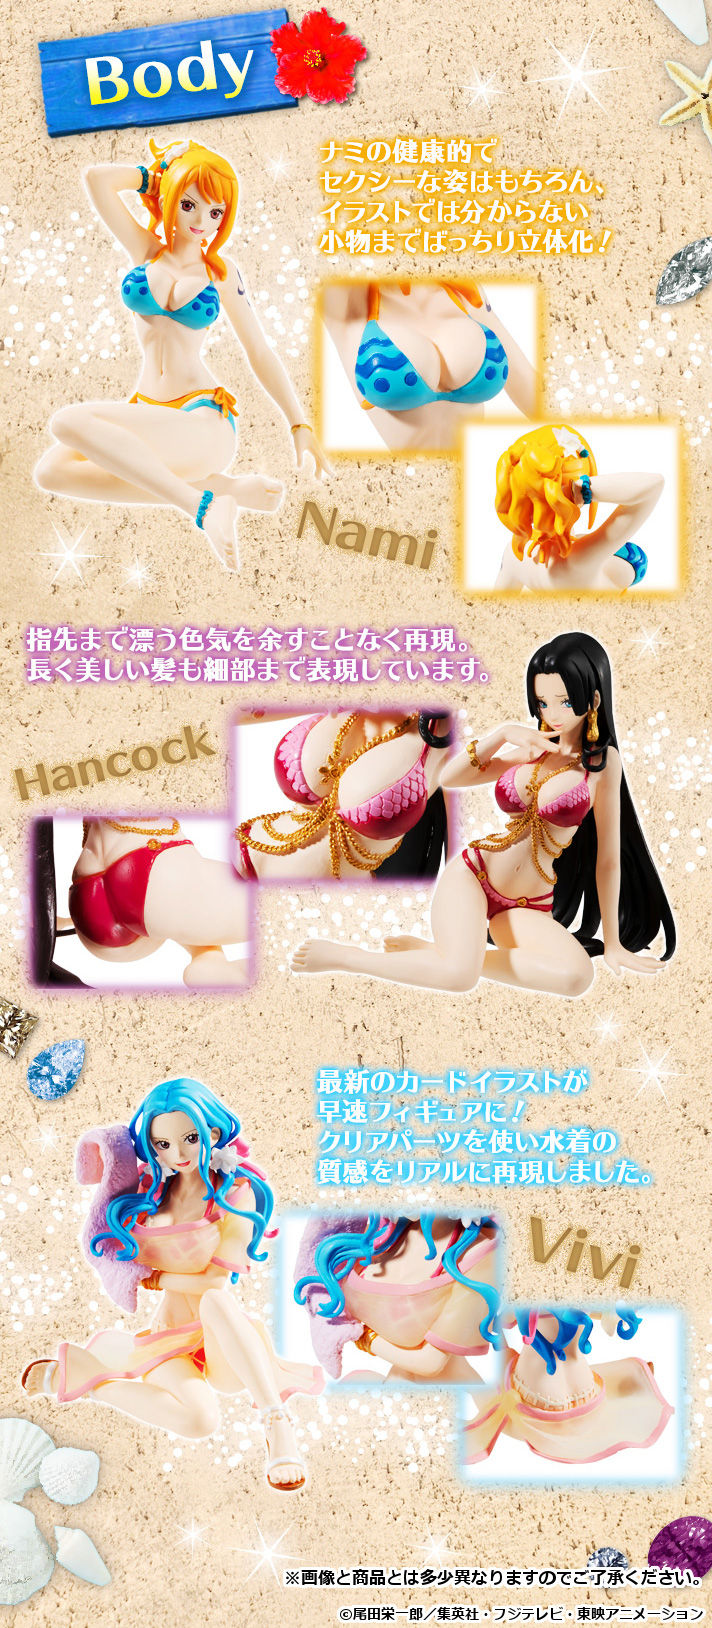 One Piece Gashaportraits X Treasure Cruise Summer Girl Paradise Special Set